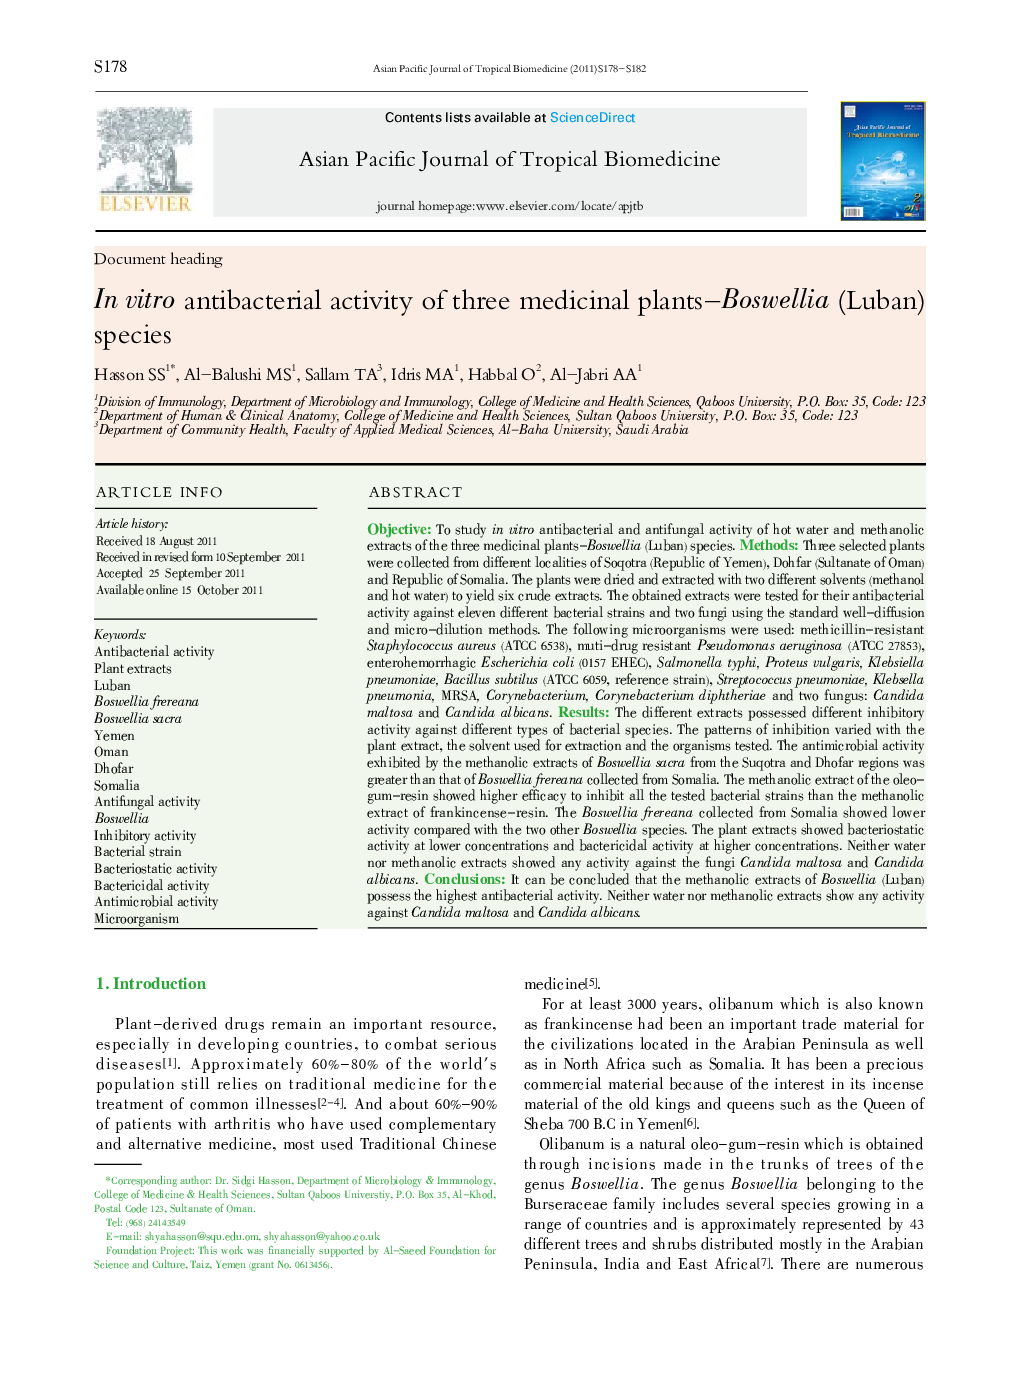 In vitro antibacterial activity of three medicinal plants-Boswellia (Luban) species